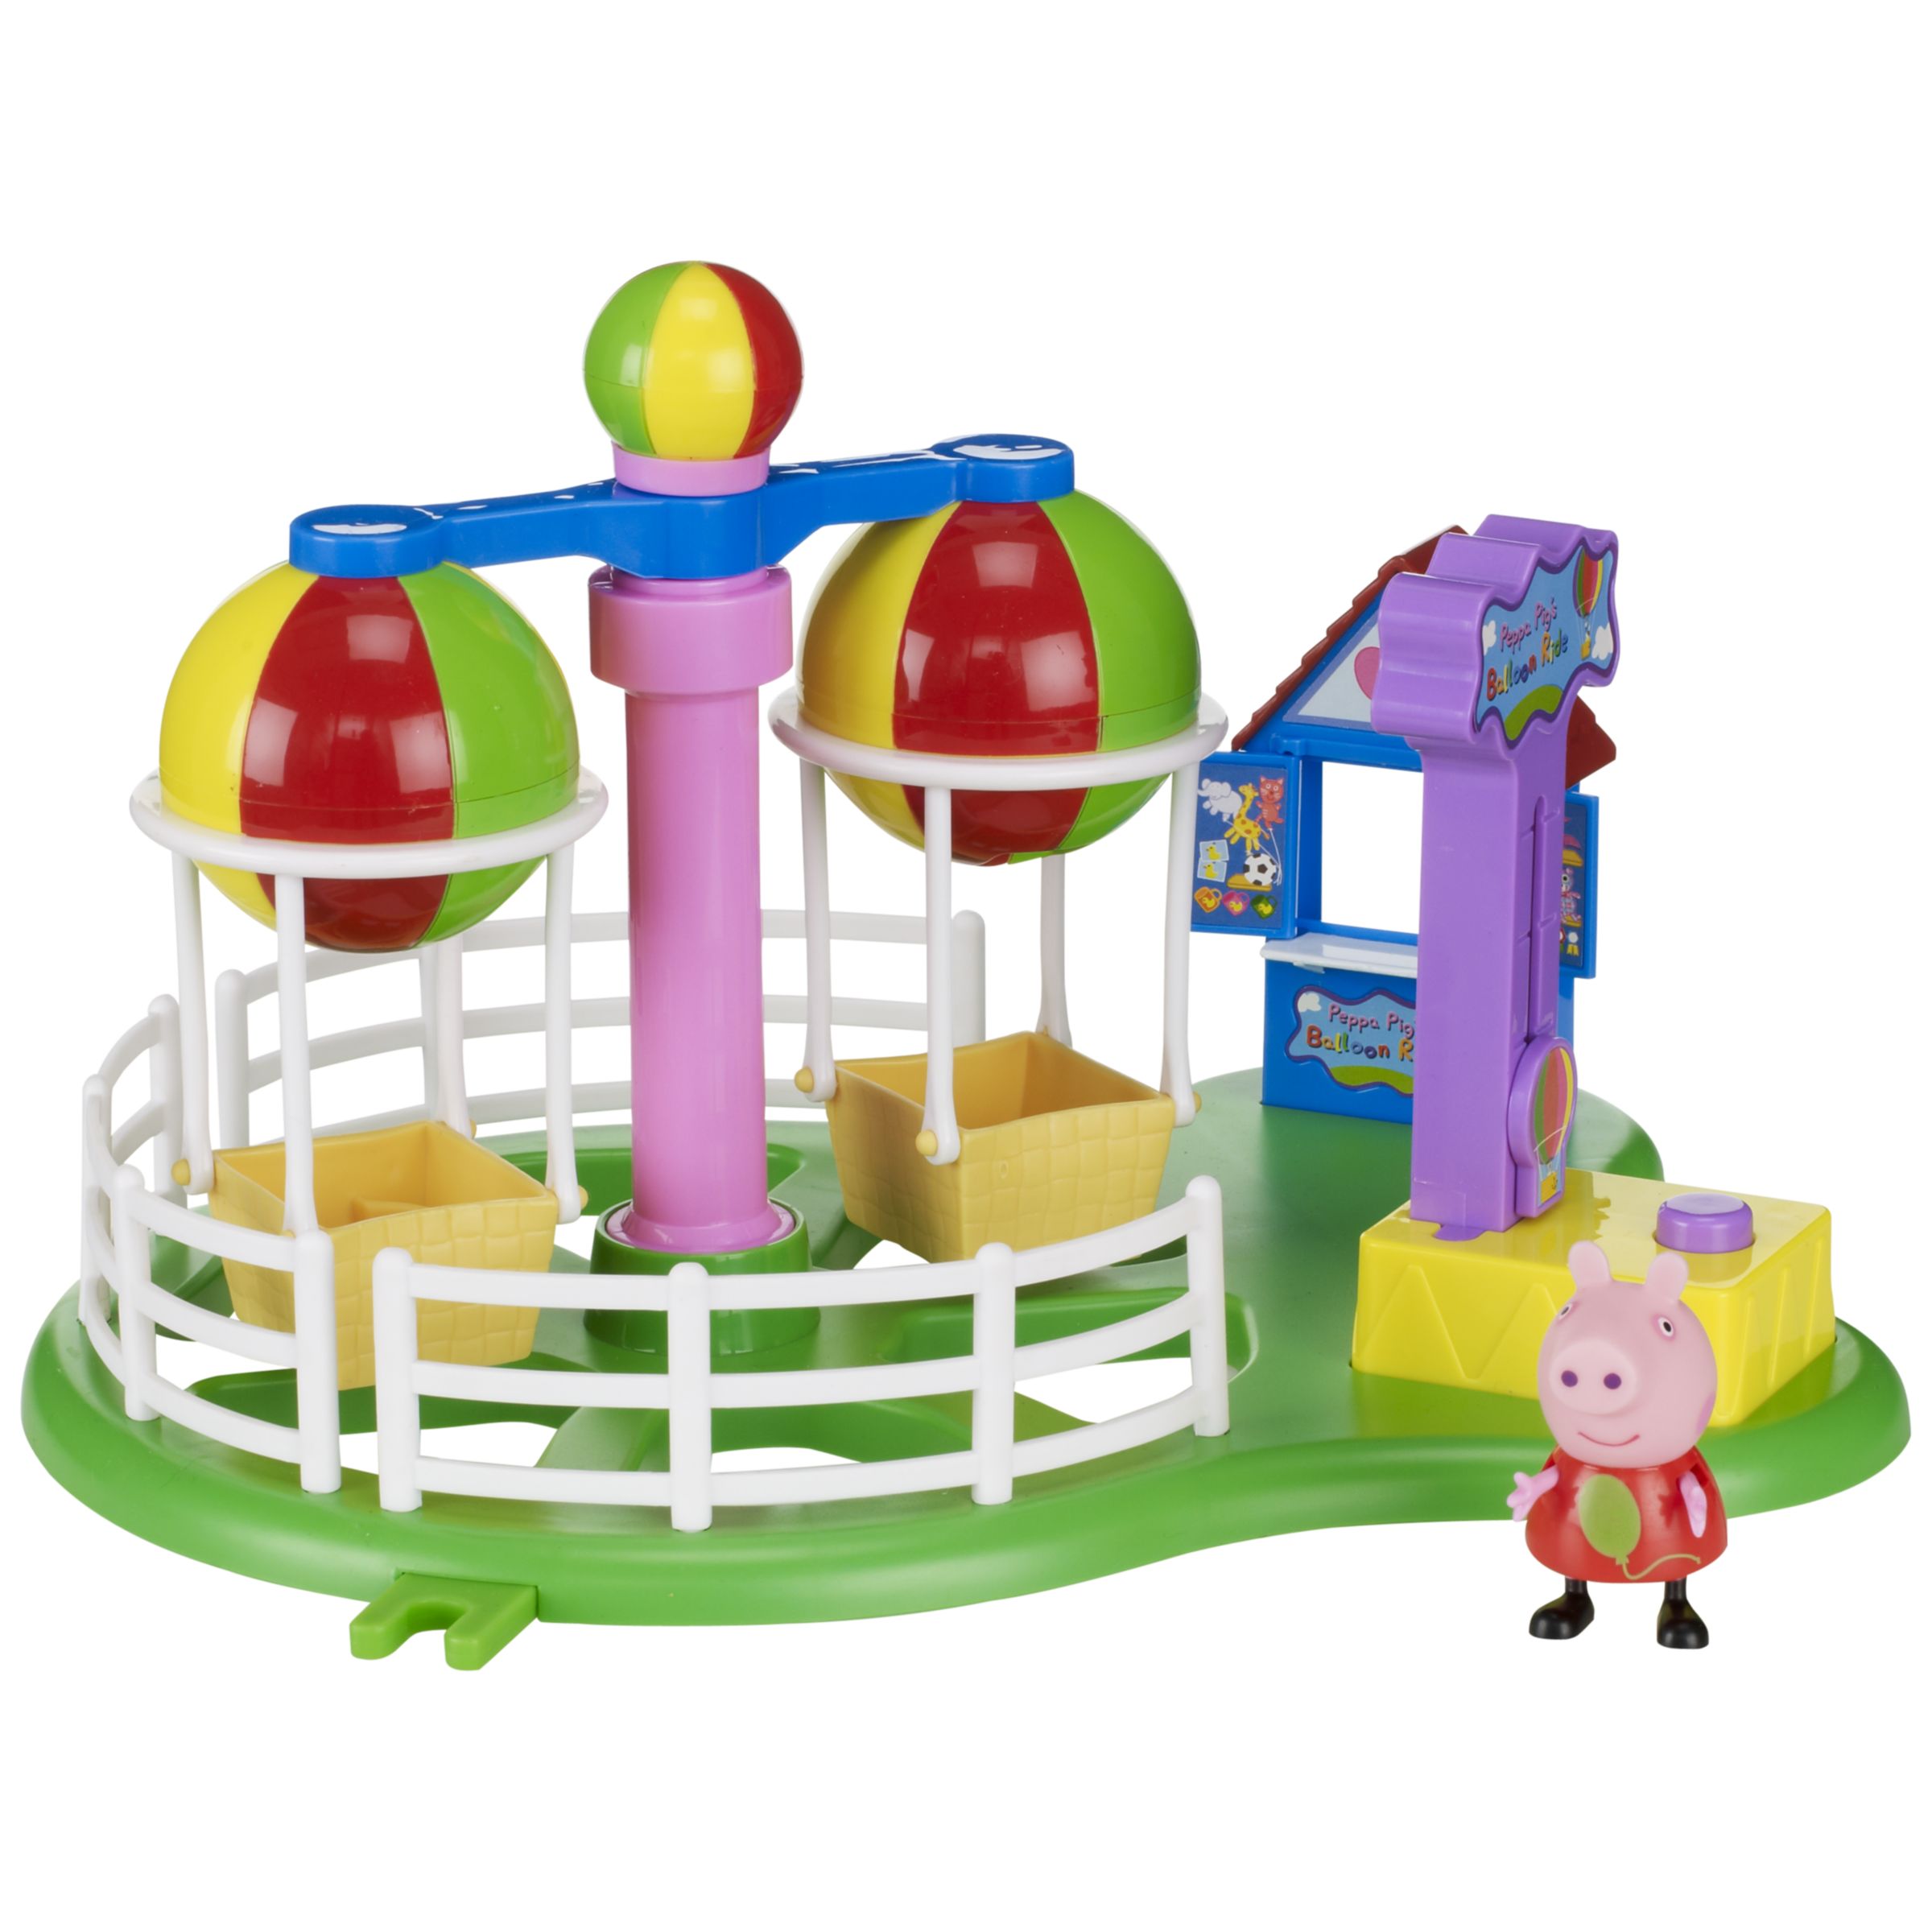 peppa pig amusement park toy